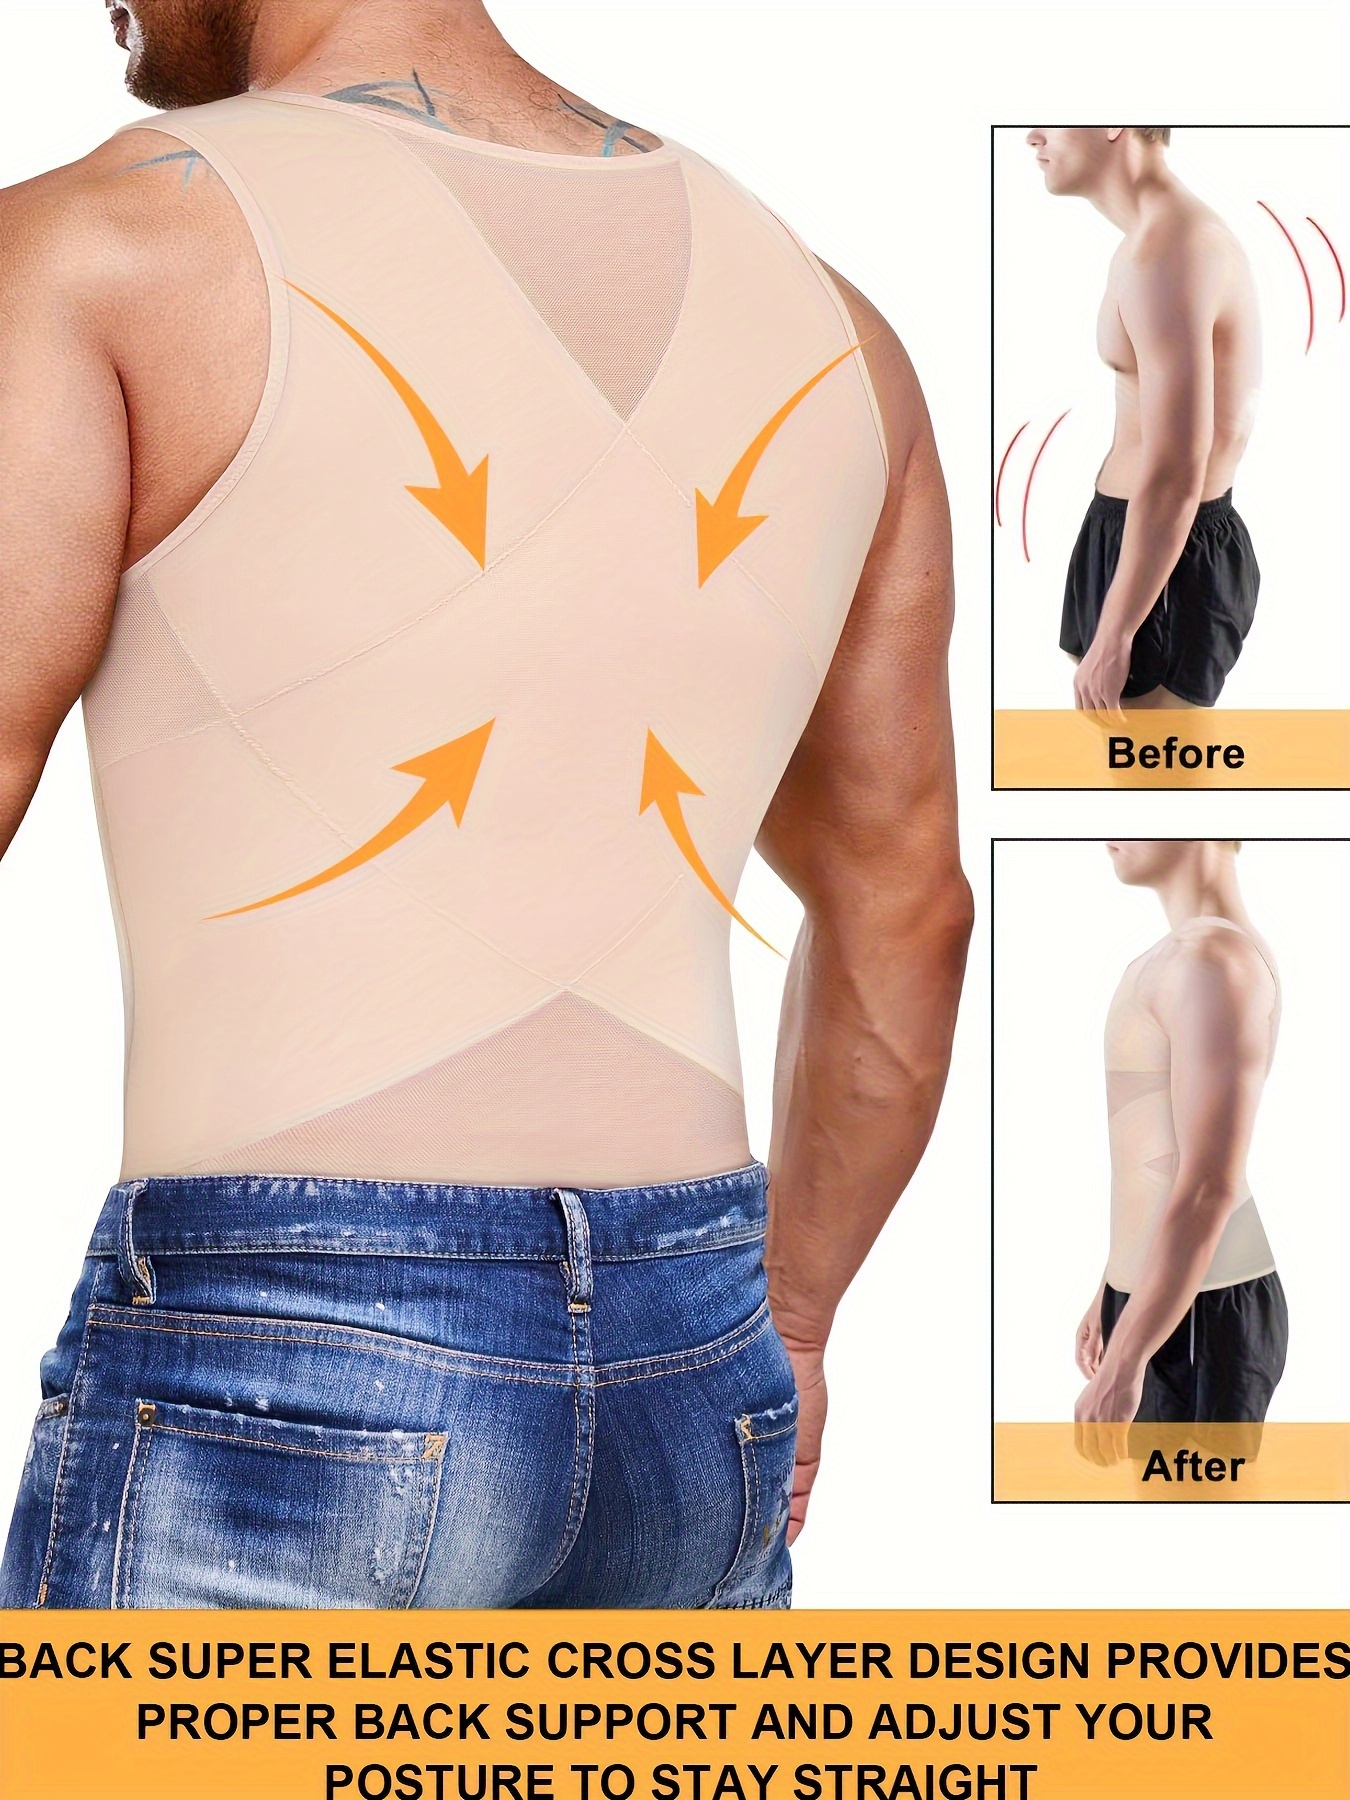 Men's Compression Shirt Body Shaper Slimming Vest Tight Tummy Underwear  Tank Top